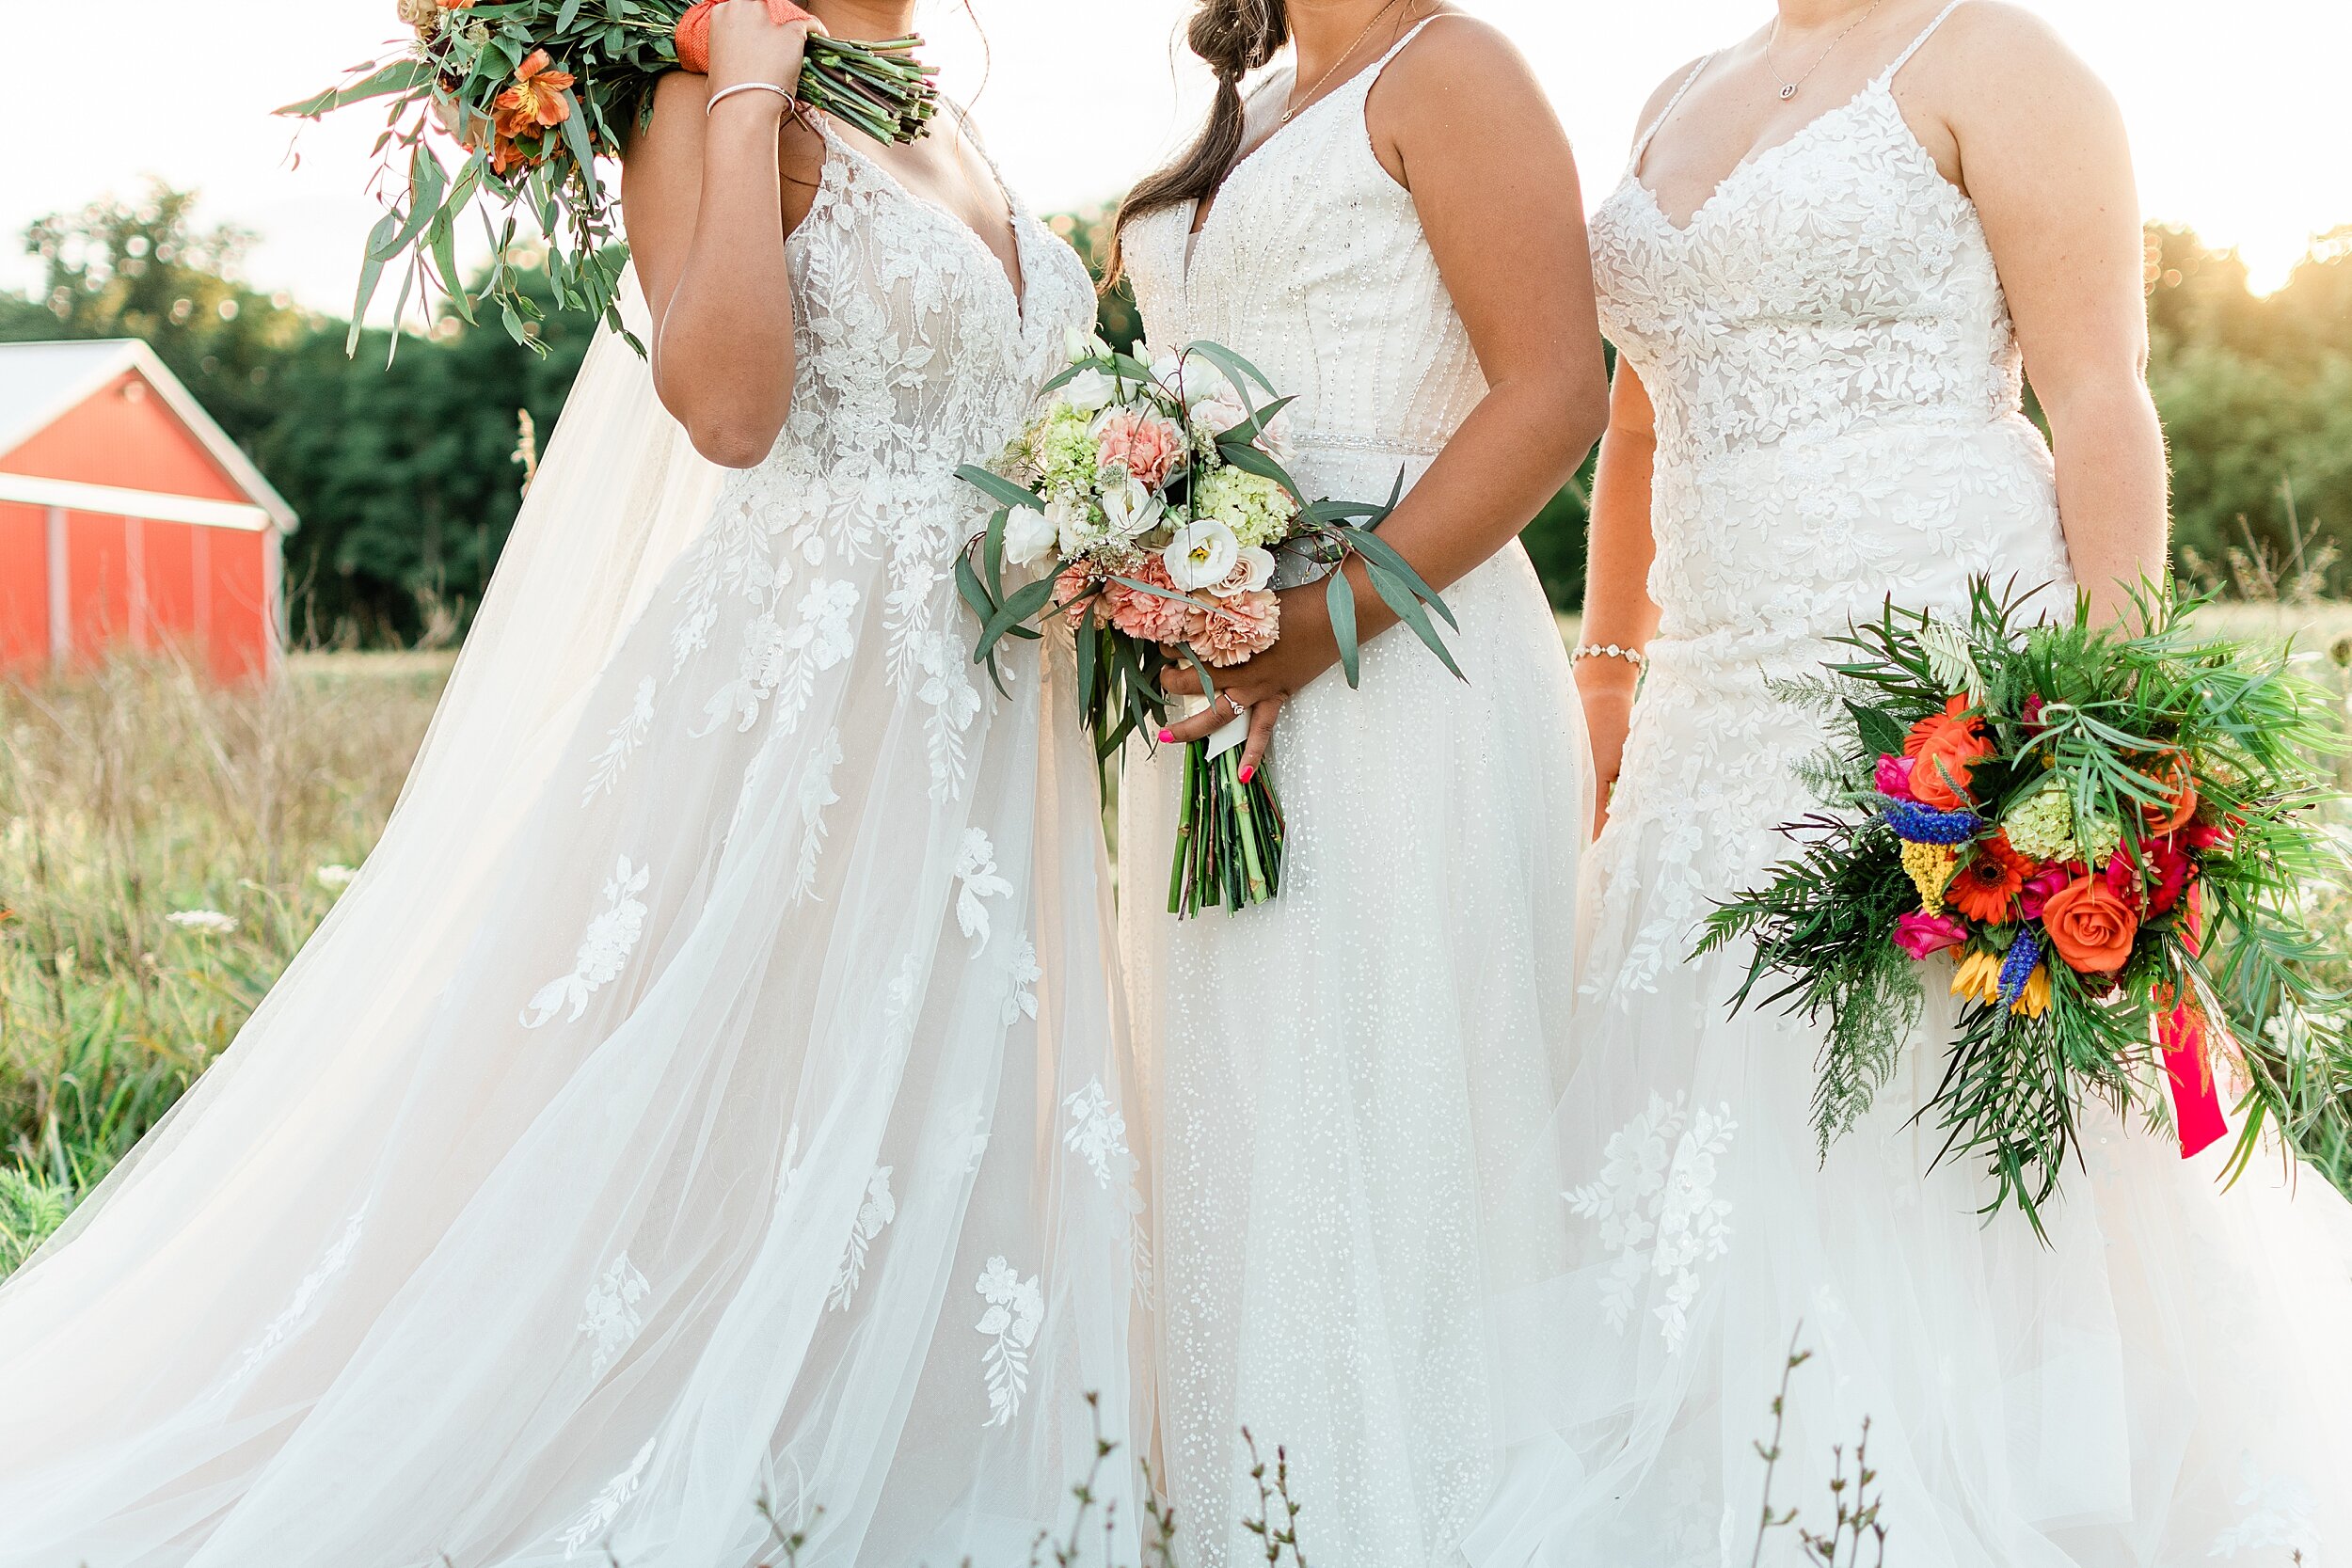 sisters-bridal-boutique-laudicks-jewelry-betsys-bouquets-van-wert-ohio-wedding-photographer-the-association-photography_6924.jpg